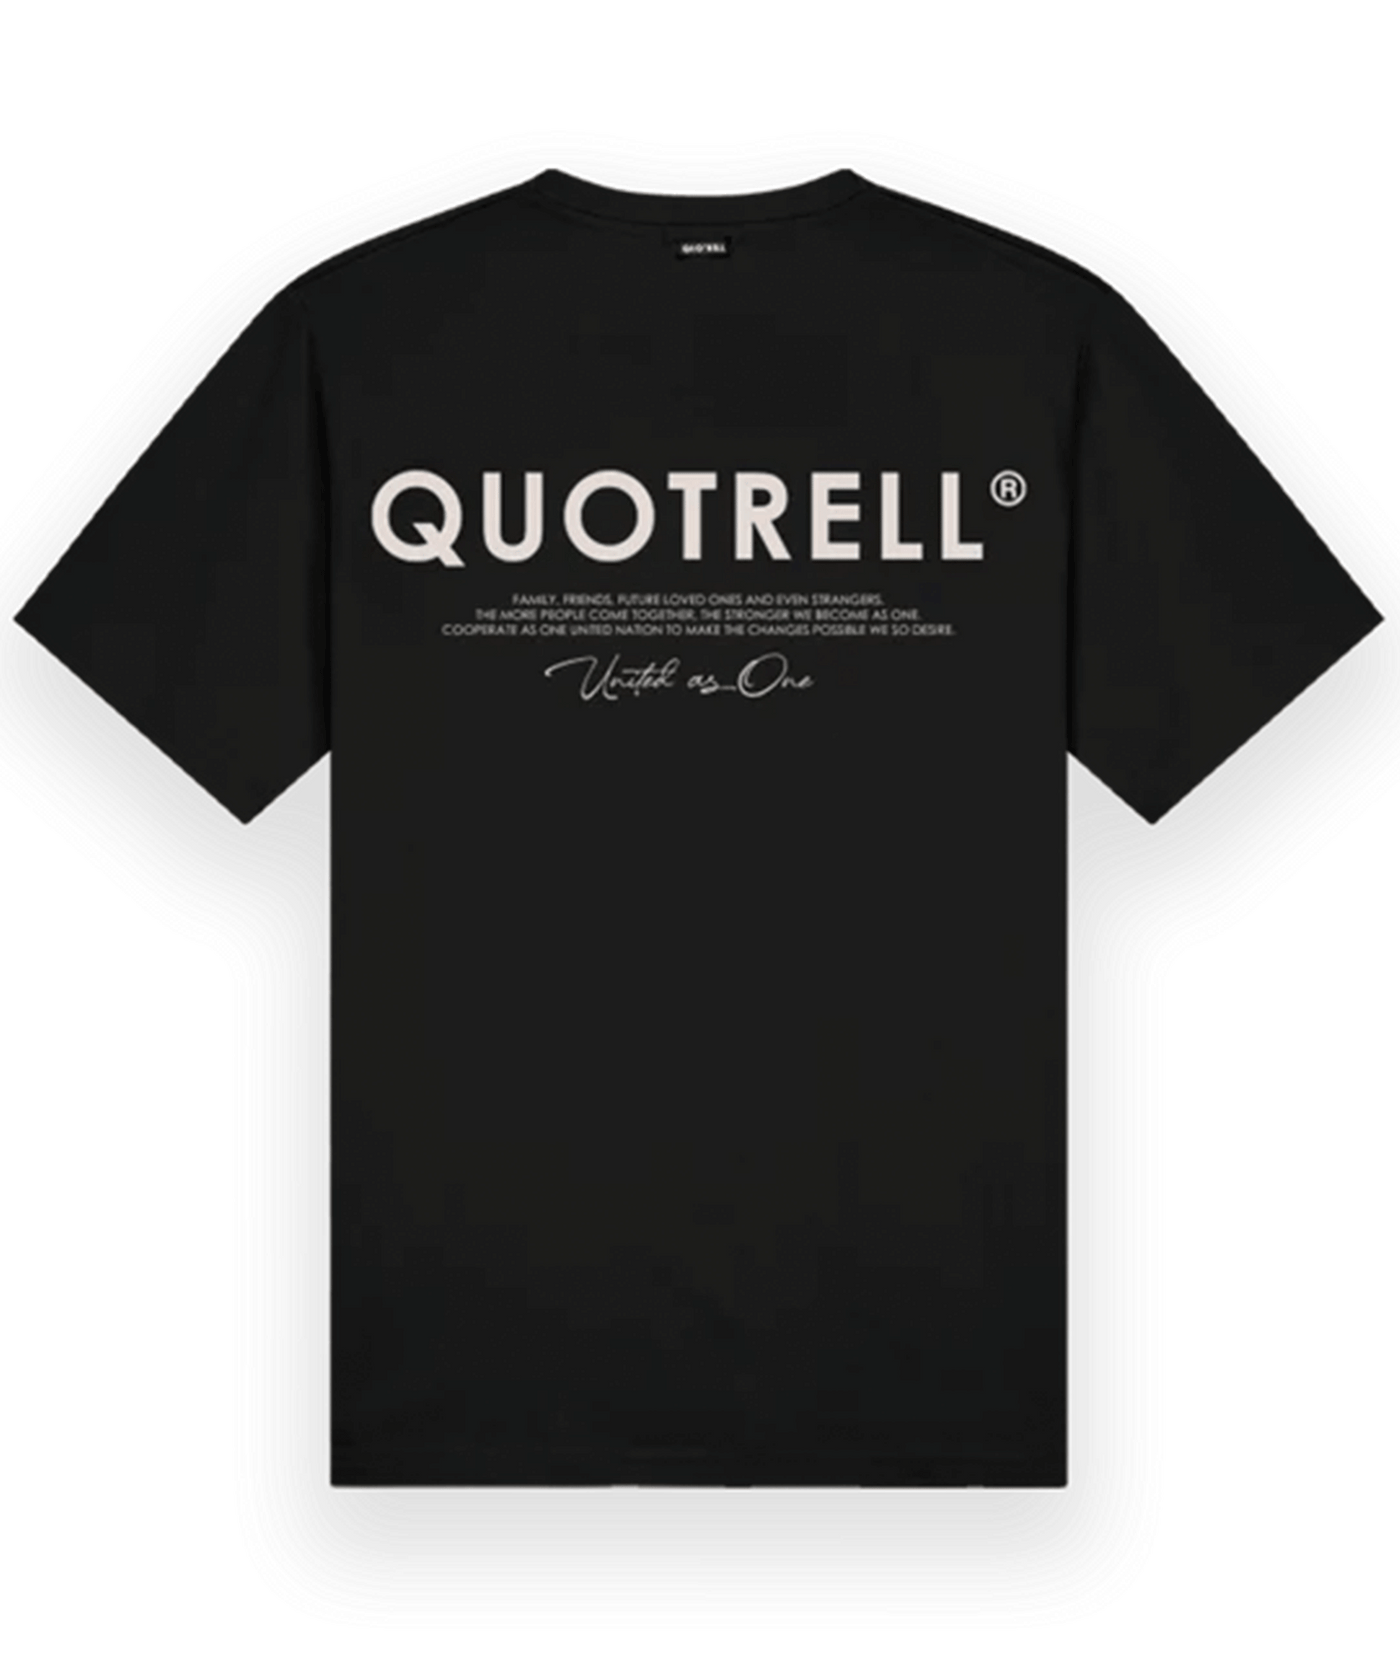 Quotrell - Jaipur - T-shirt - Black/beige